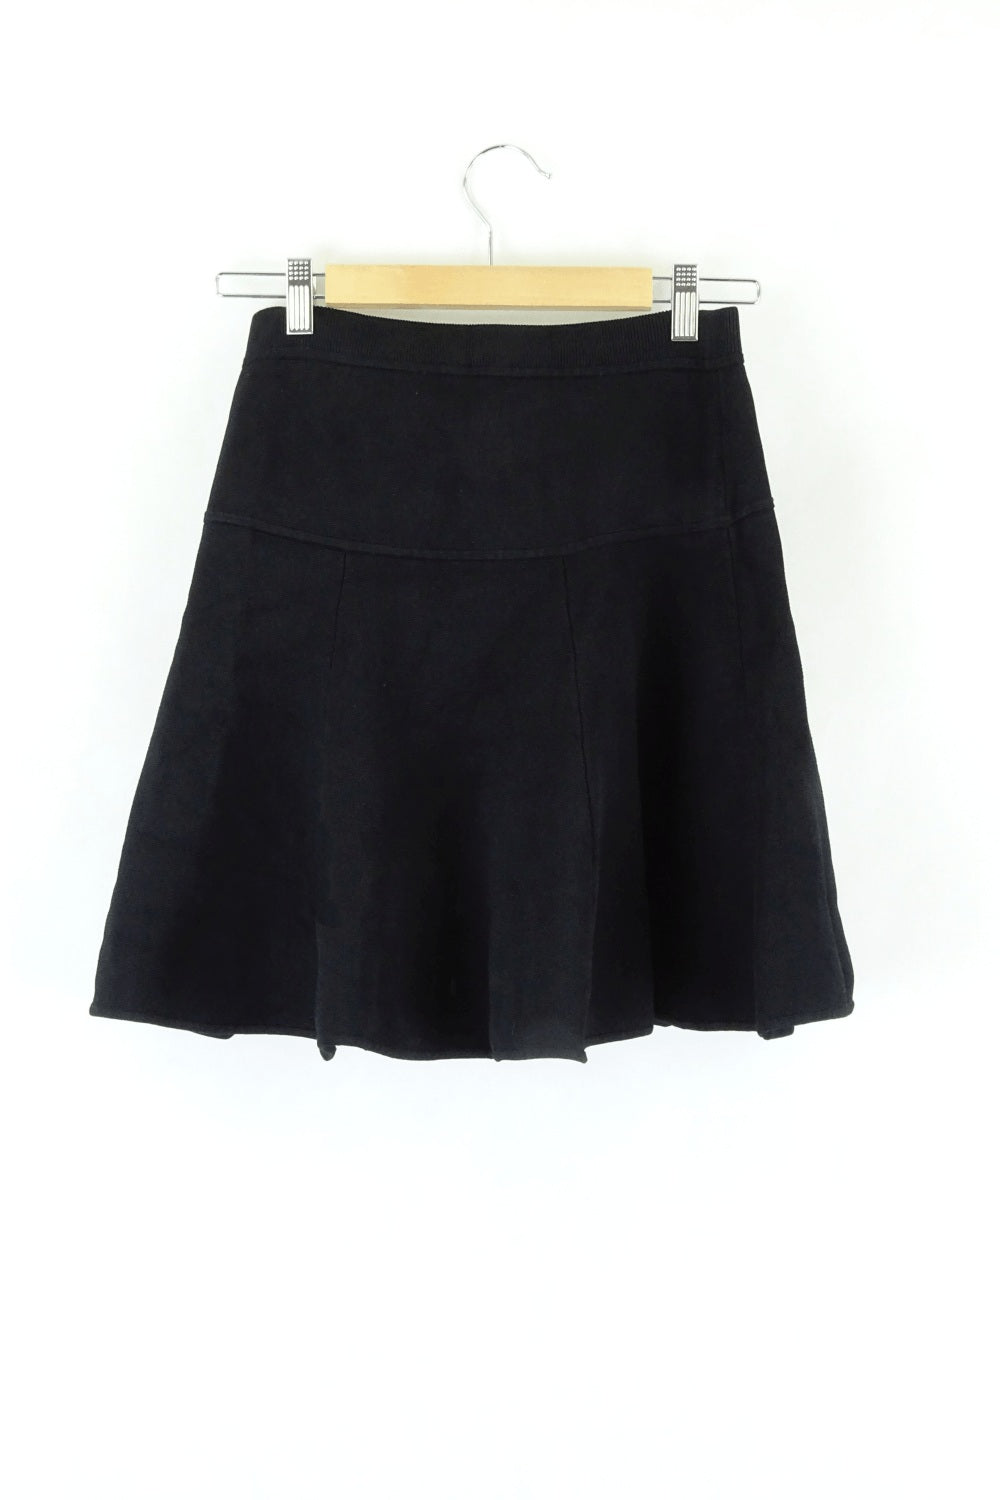 A.L.C Black Skirt S